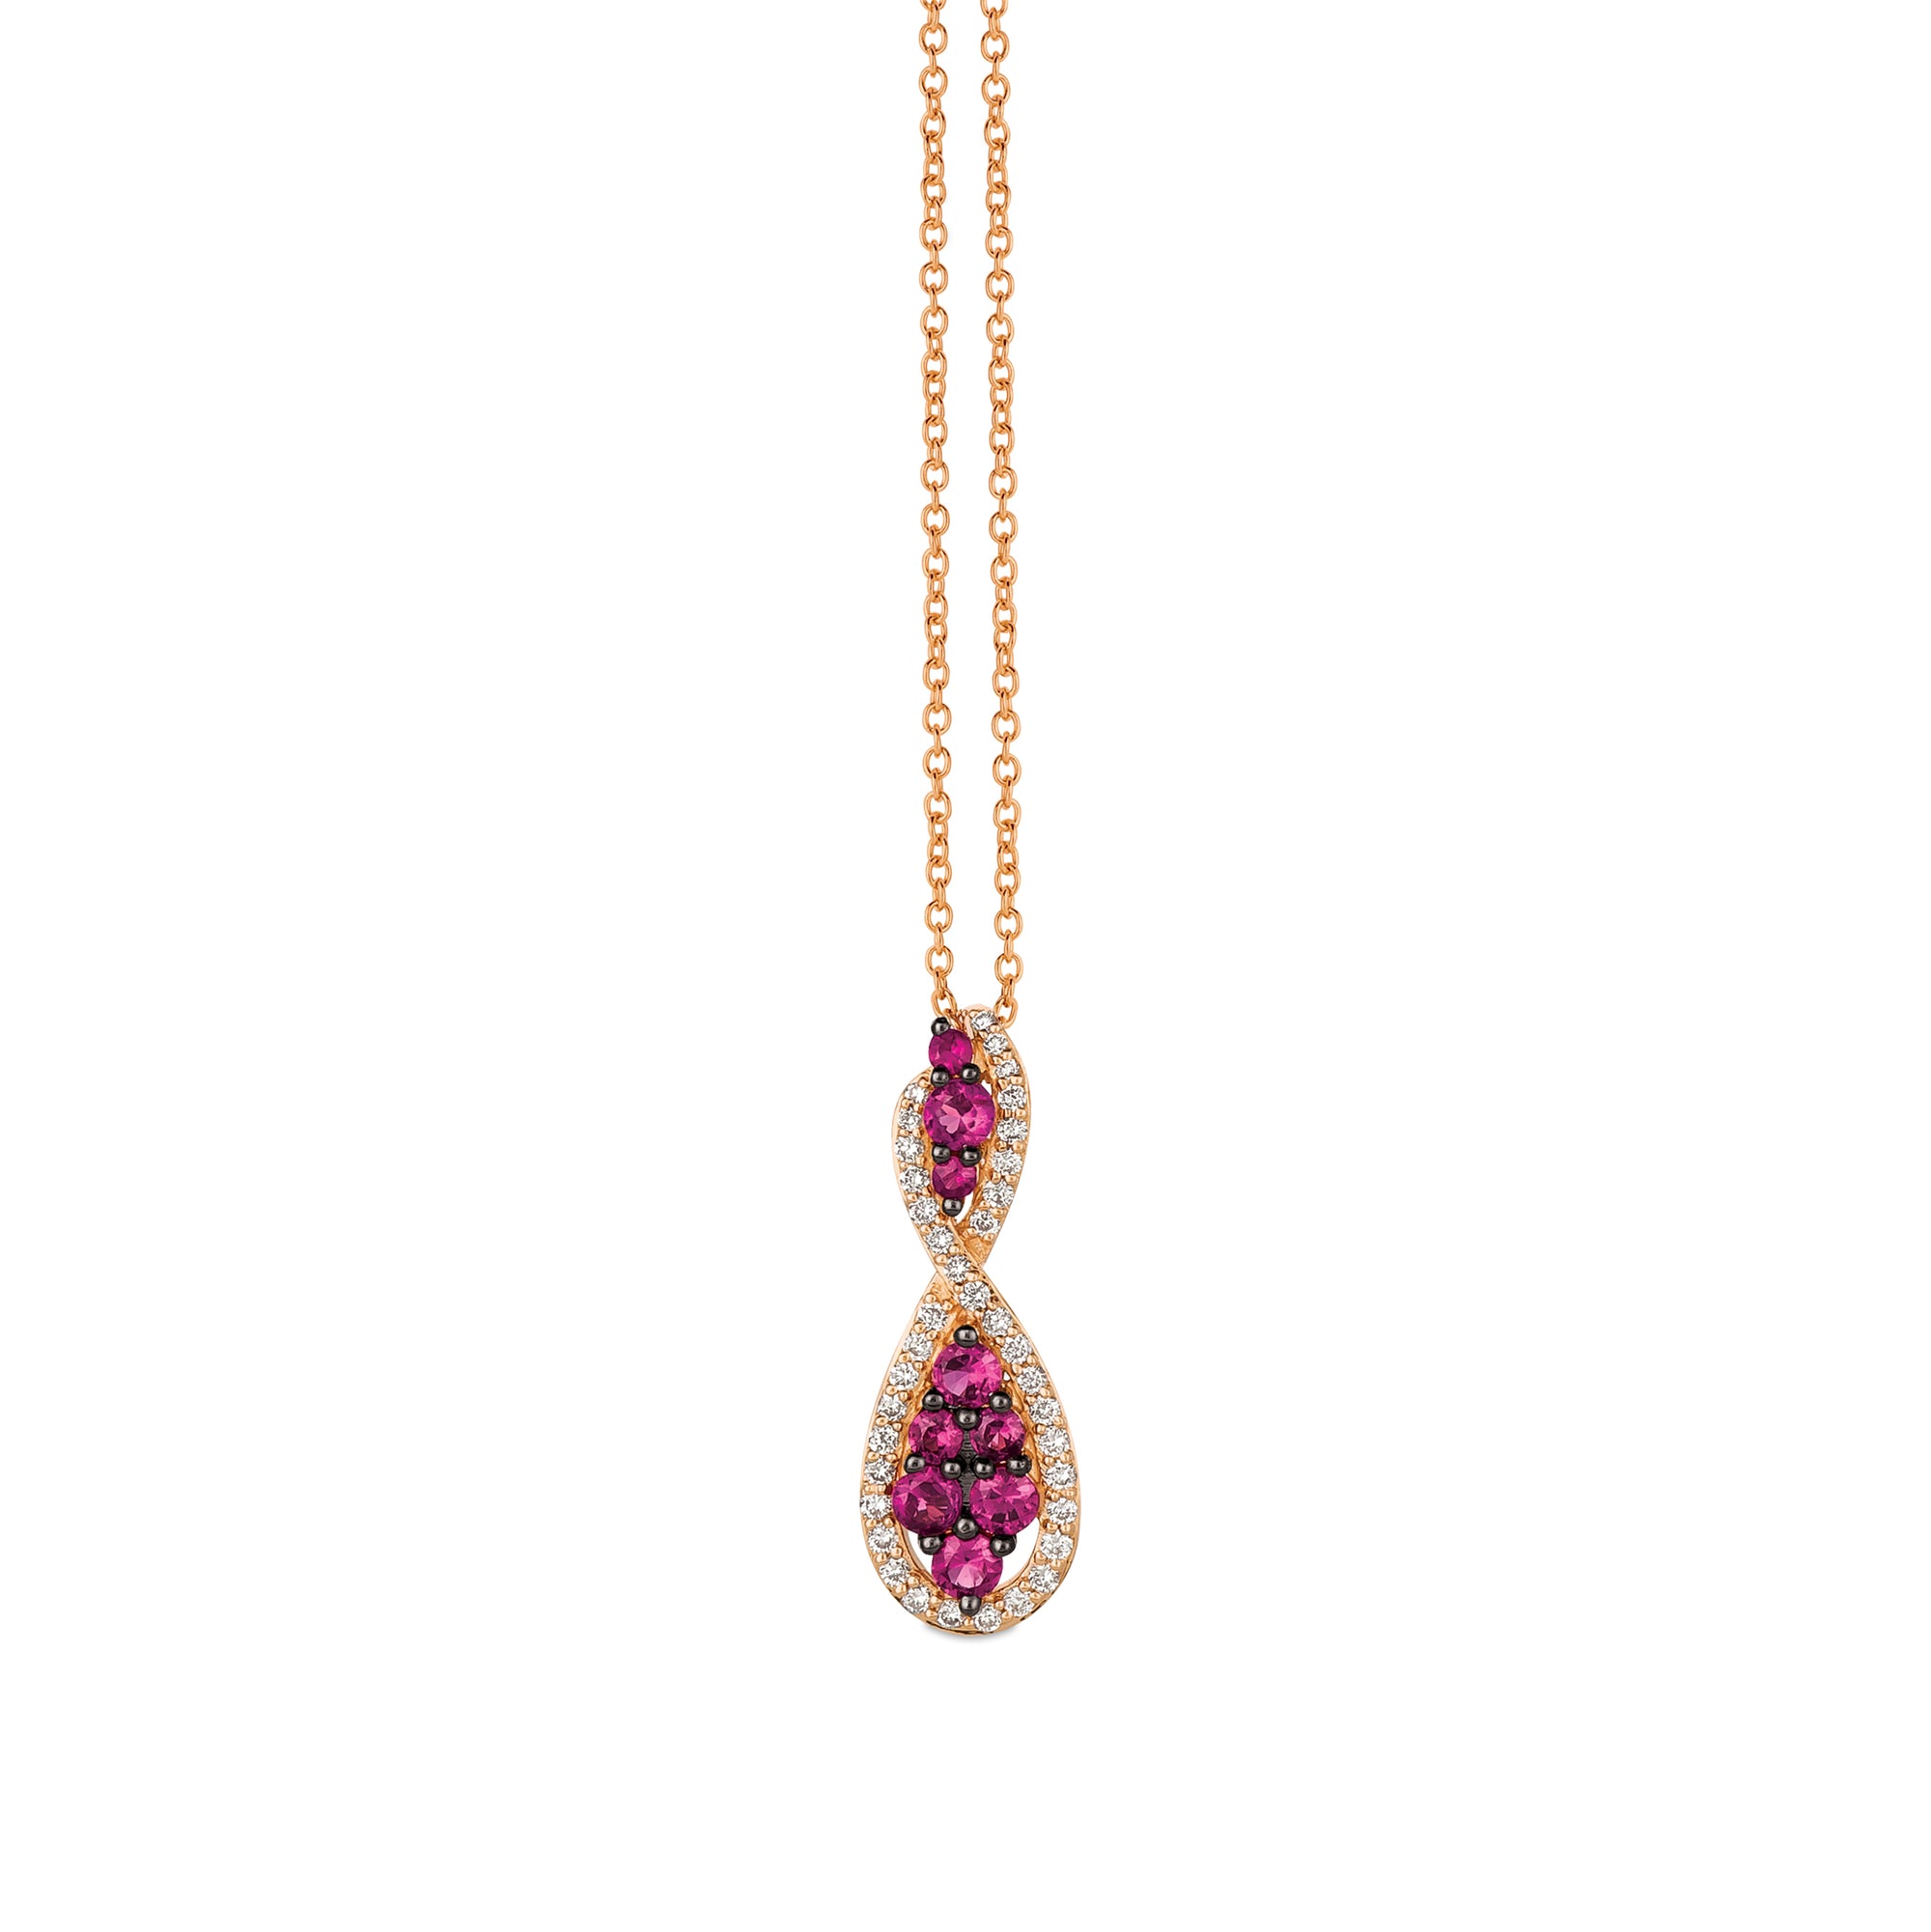 Le Vian Pendant featuring Passion Ruby Vanilla Diamonds set in 14K Strawberry Gold